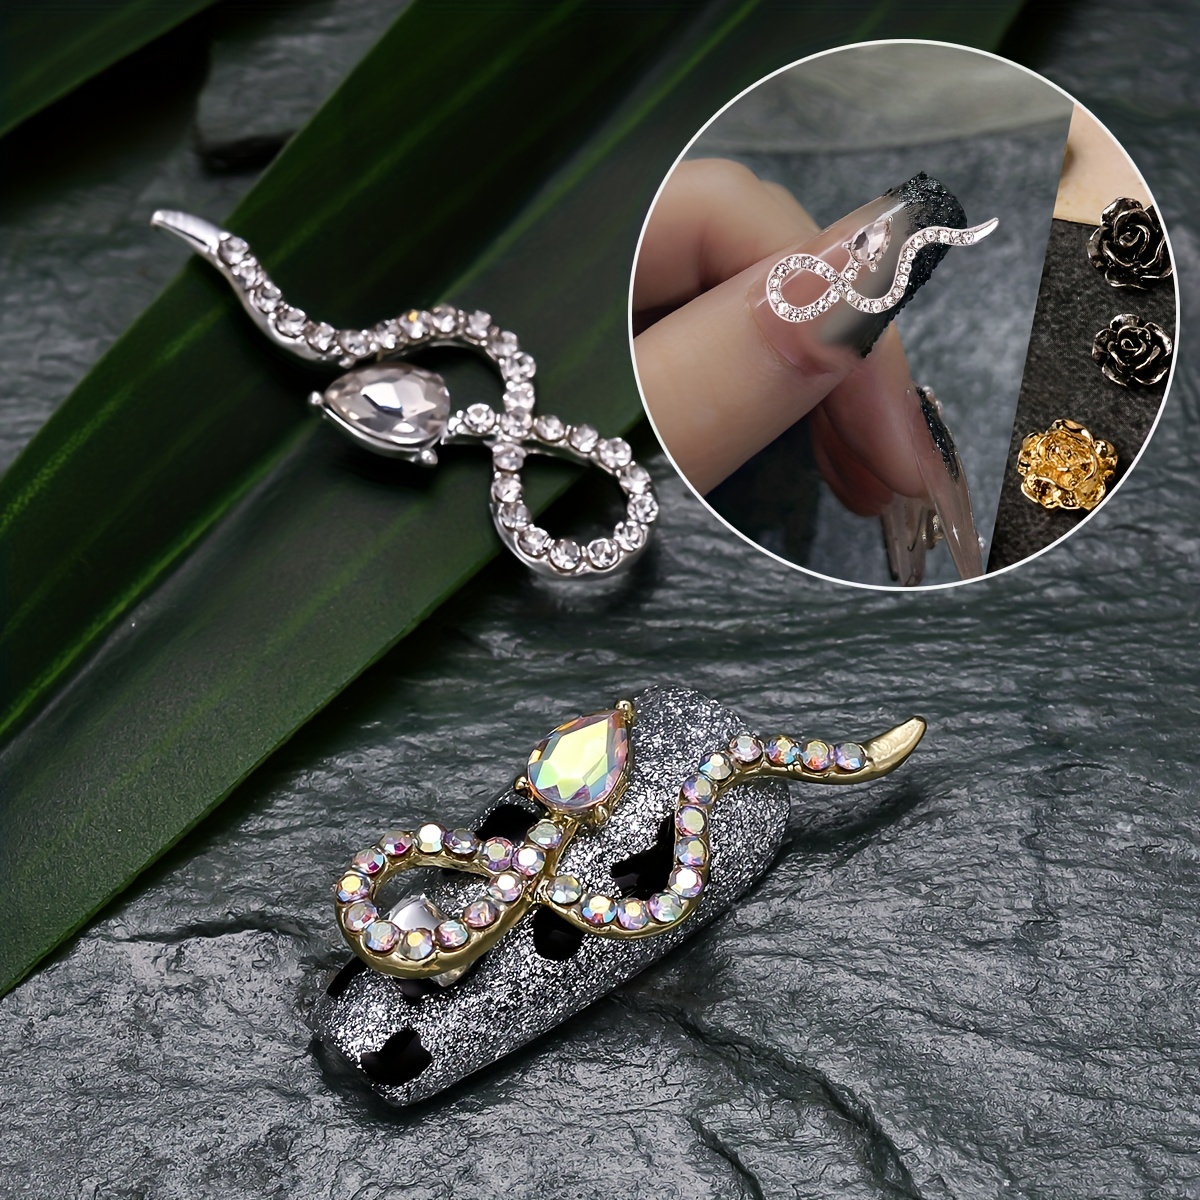 Sohindel Rhinestones for Nails Nail Supplies Nail Diamonds Rhinestones Flatback Charms Snake-shape Embellishment Charms - Black + Gold